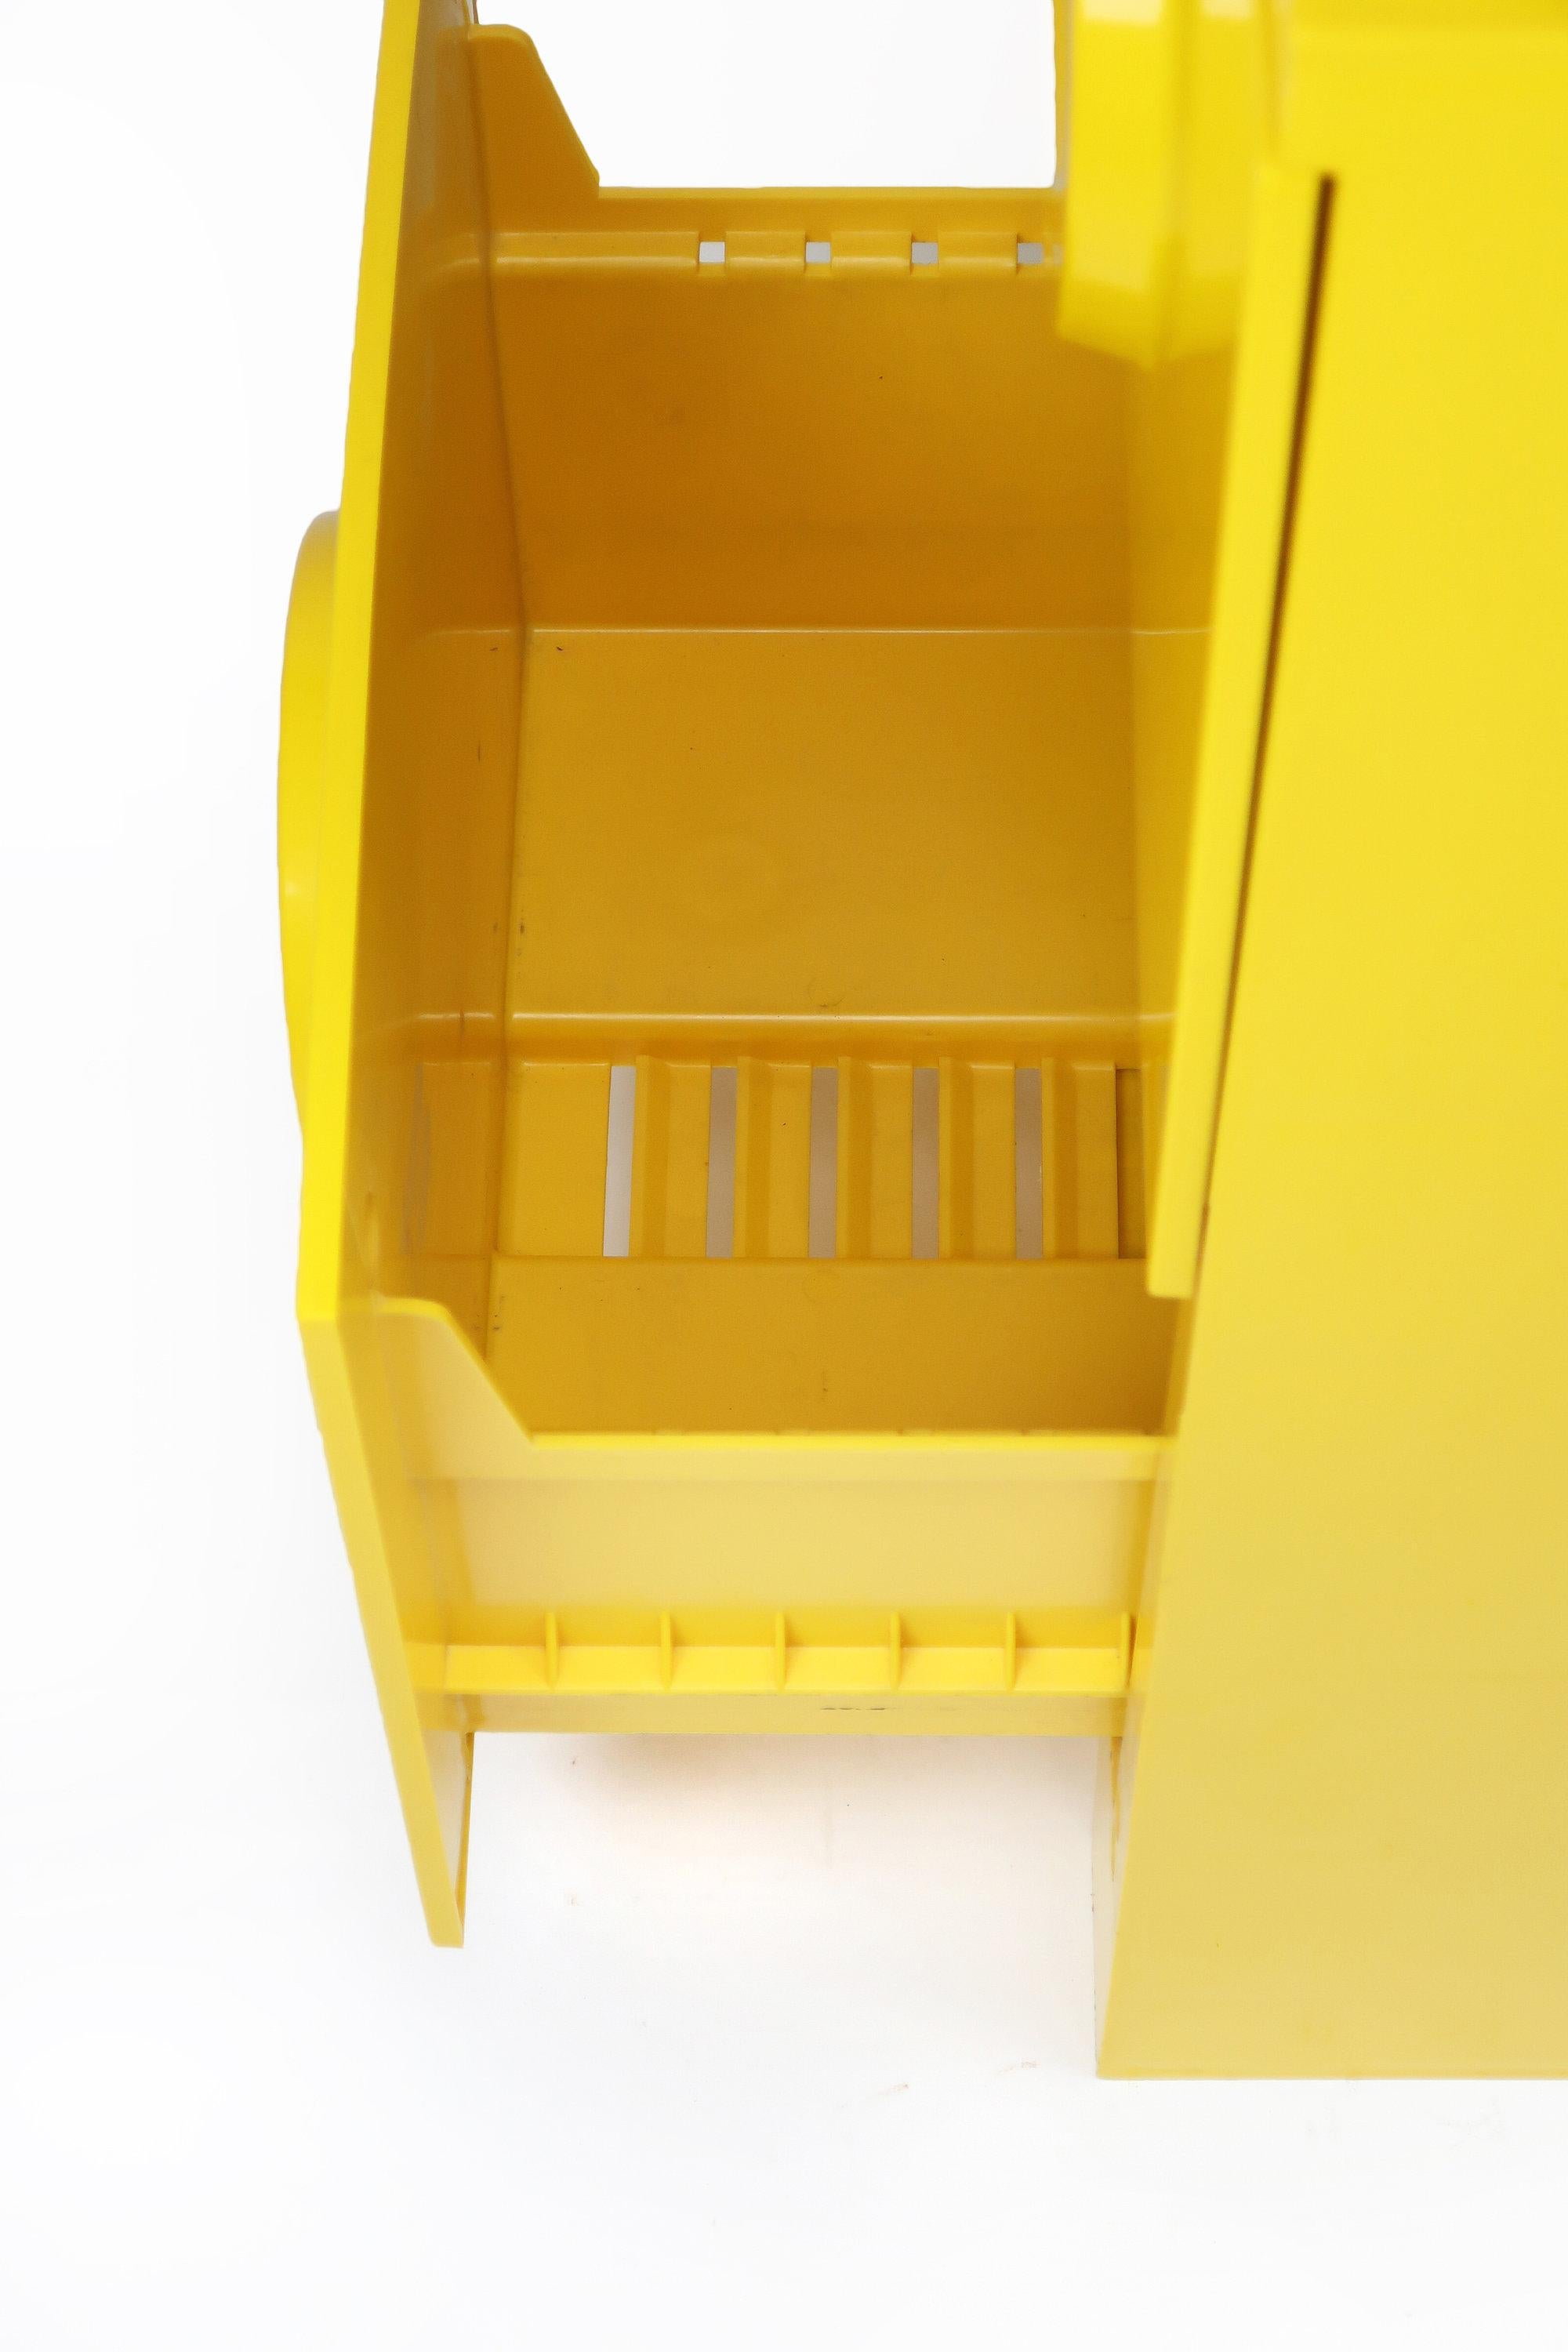 20th Century Mod Yellow Plastic Akro-Mils Filing Cabinet